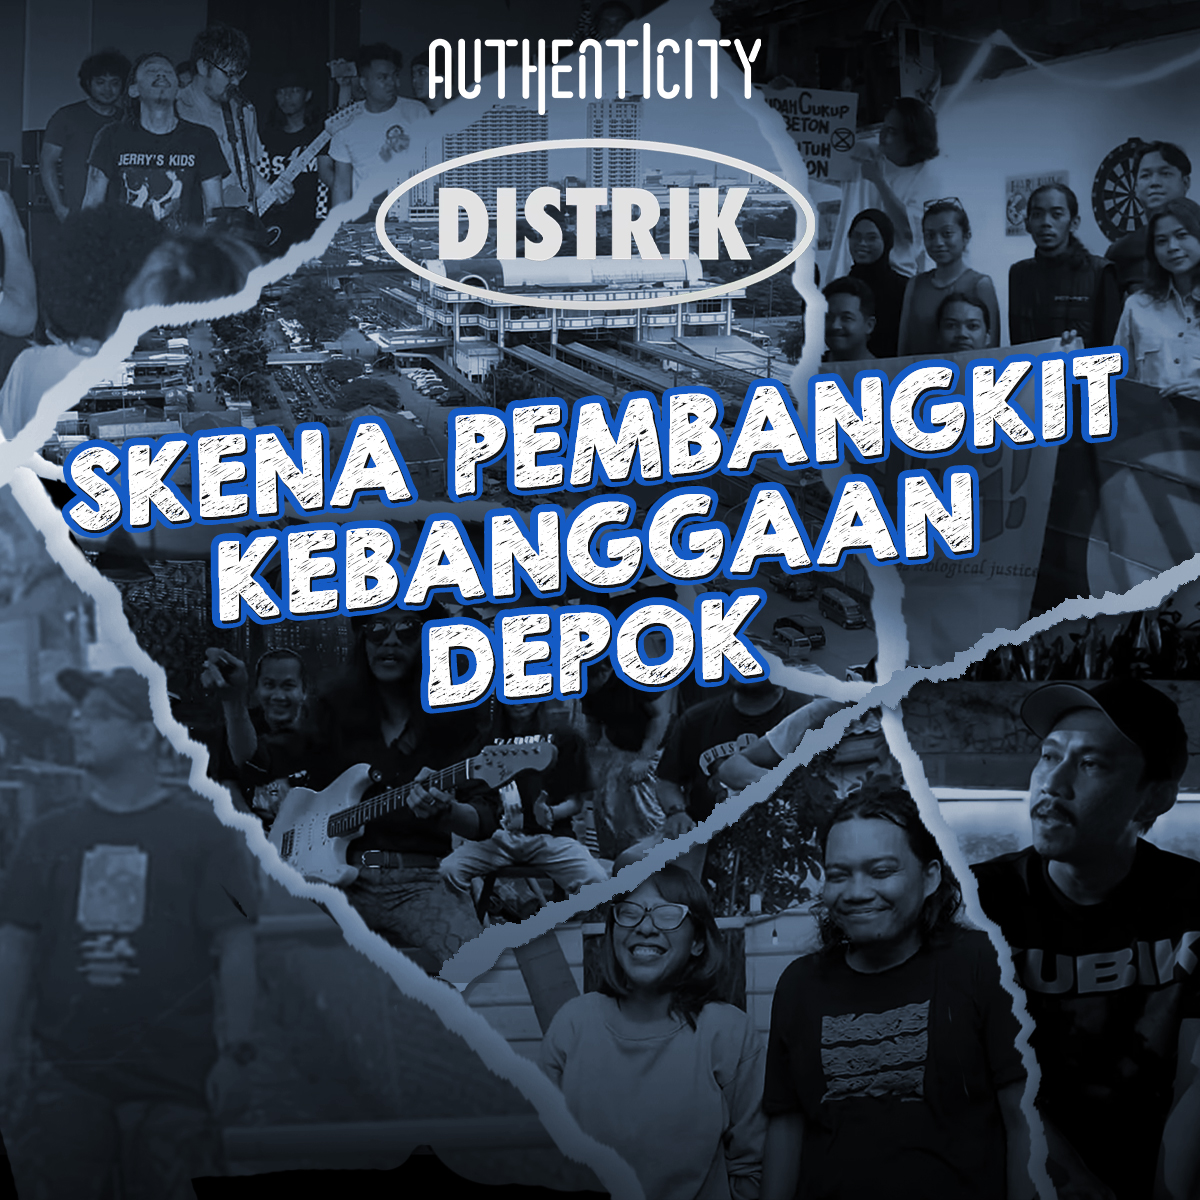 Authenticity Distrik: Skena Pembangkit Kebanggaan Depok